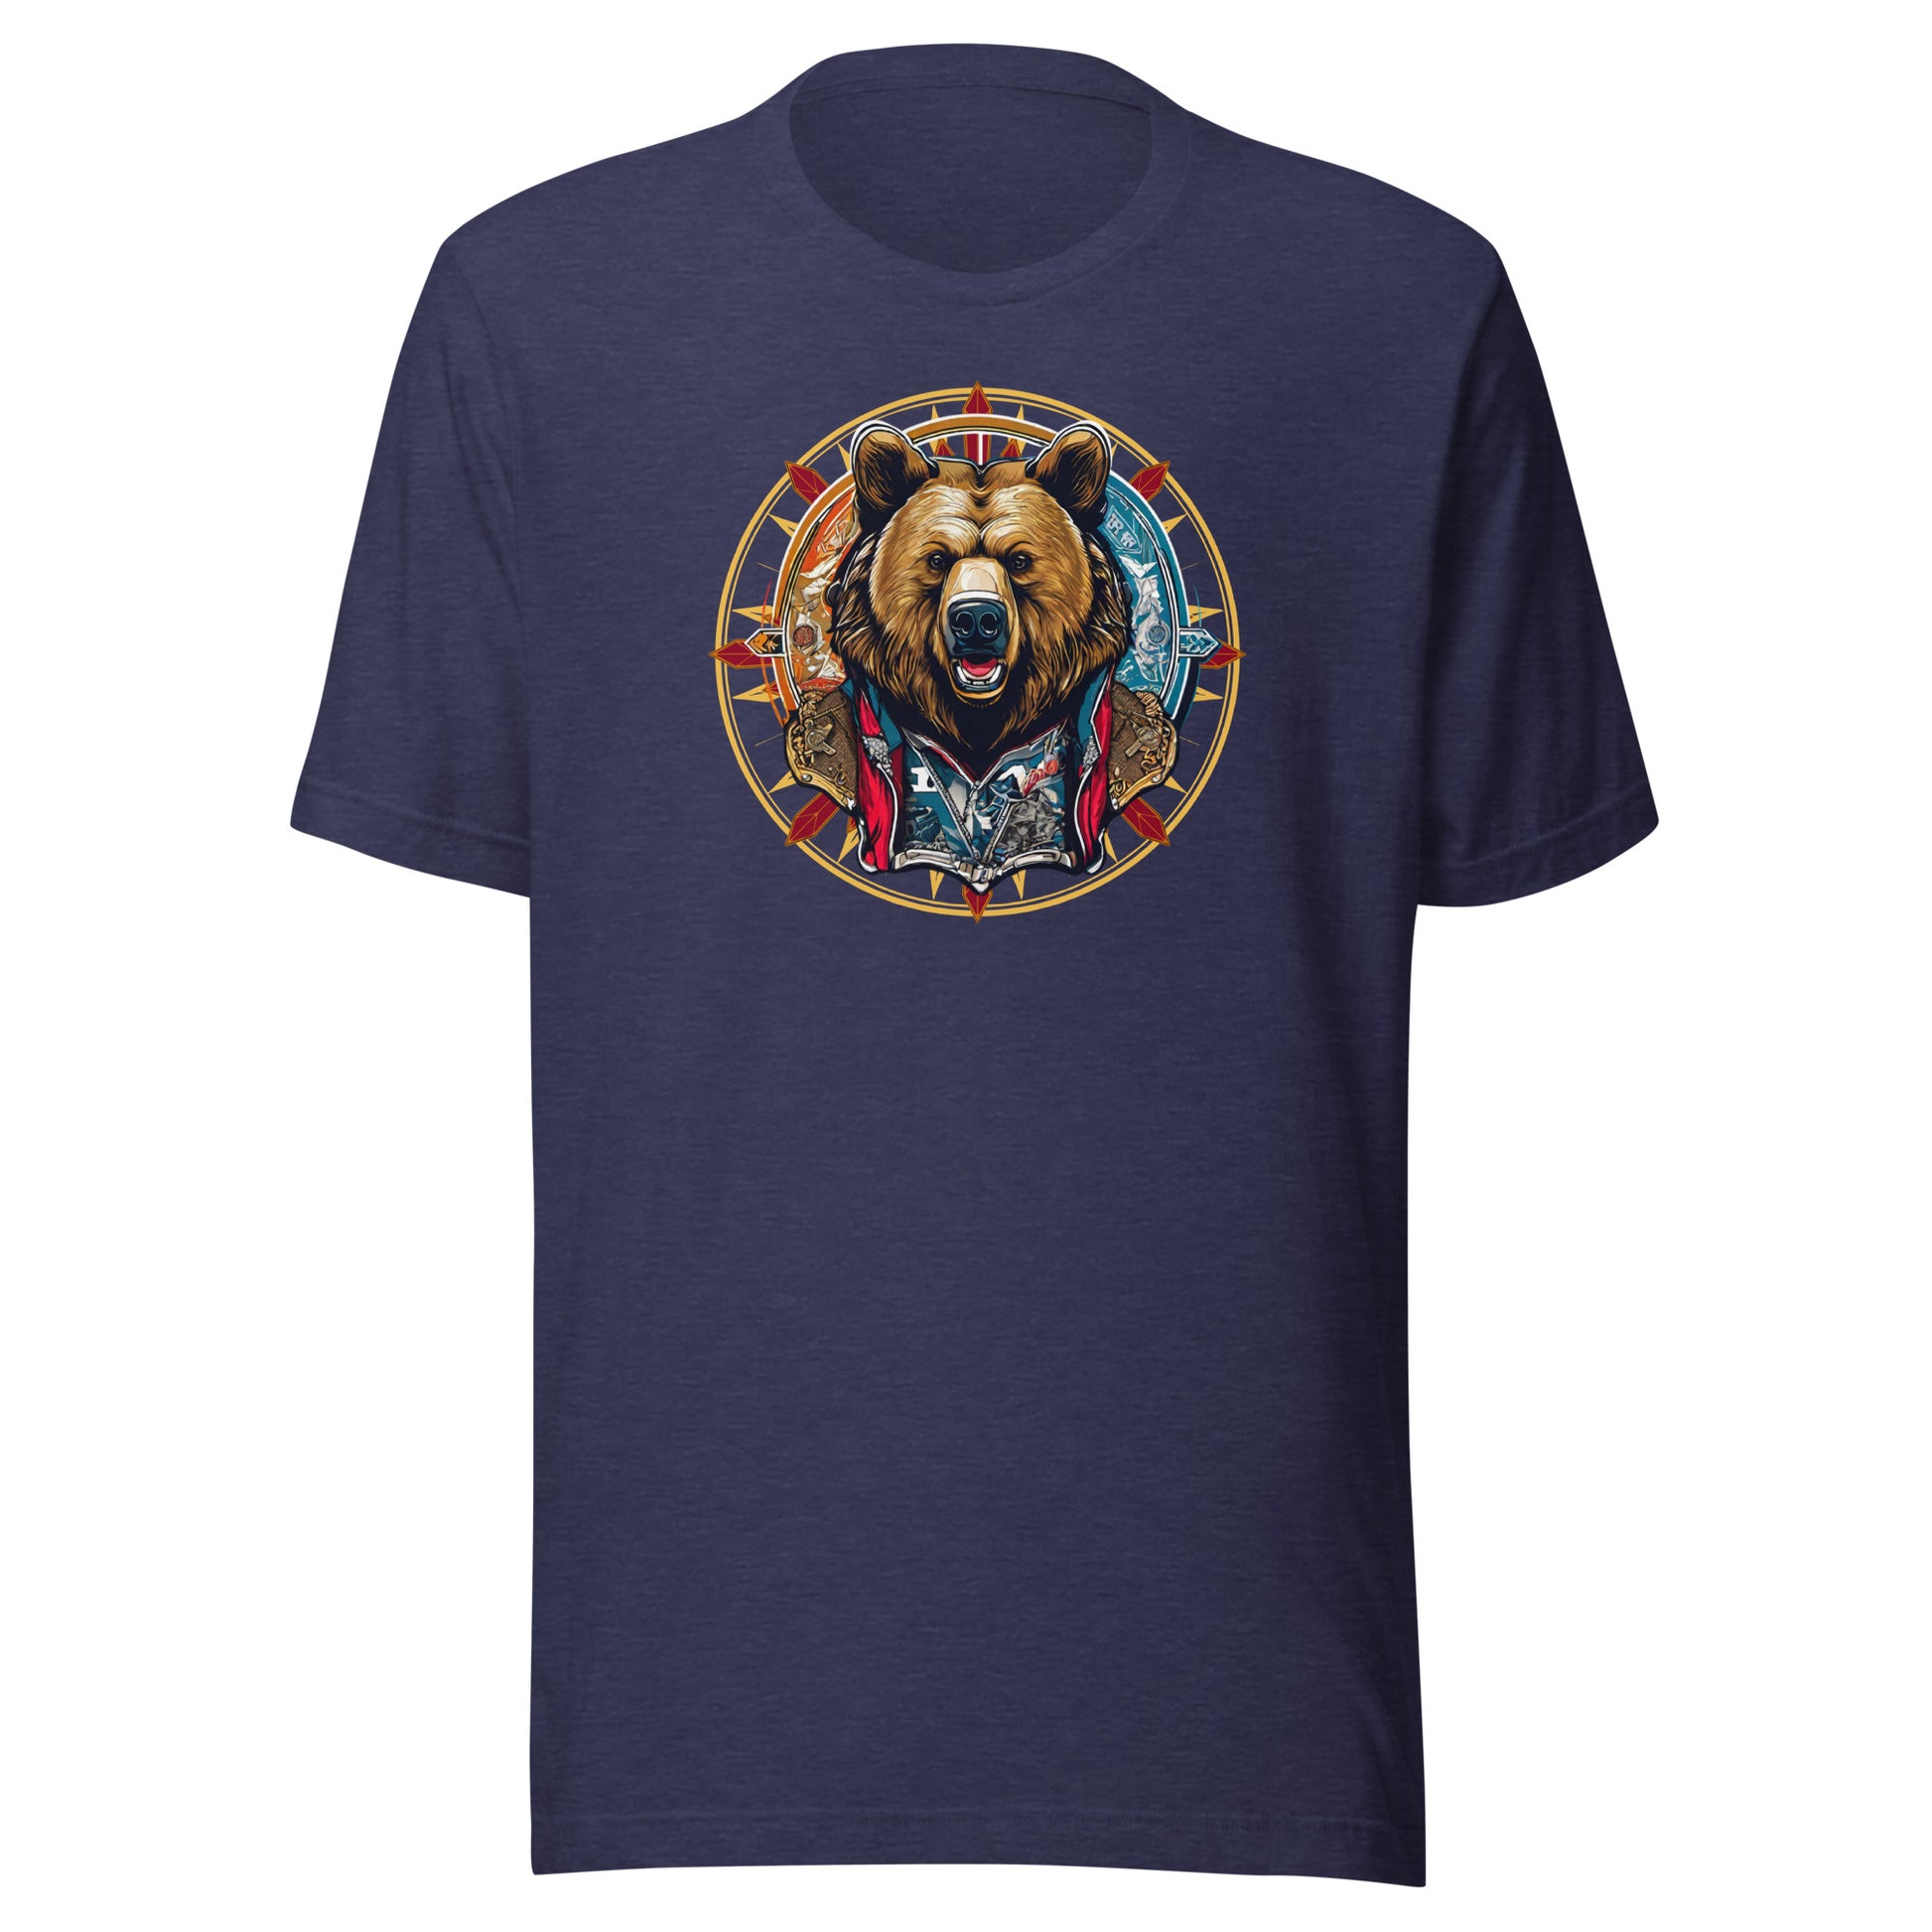 Bear Emblem Men's Graphic T-Shirt Heather Midnight Navy